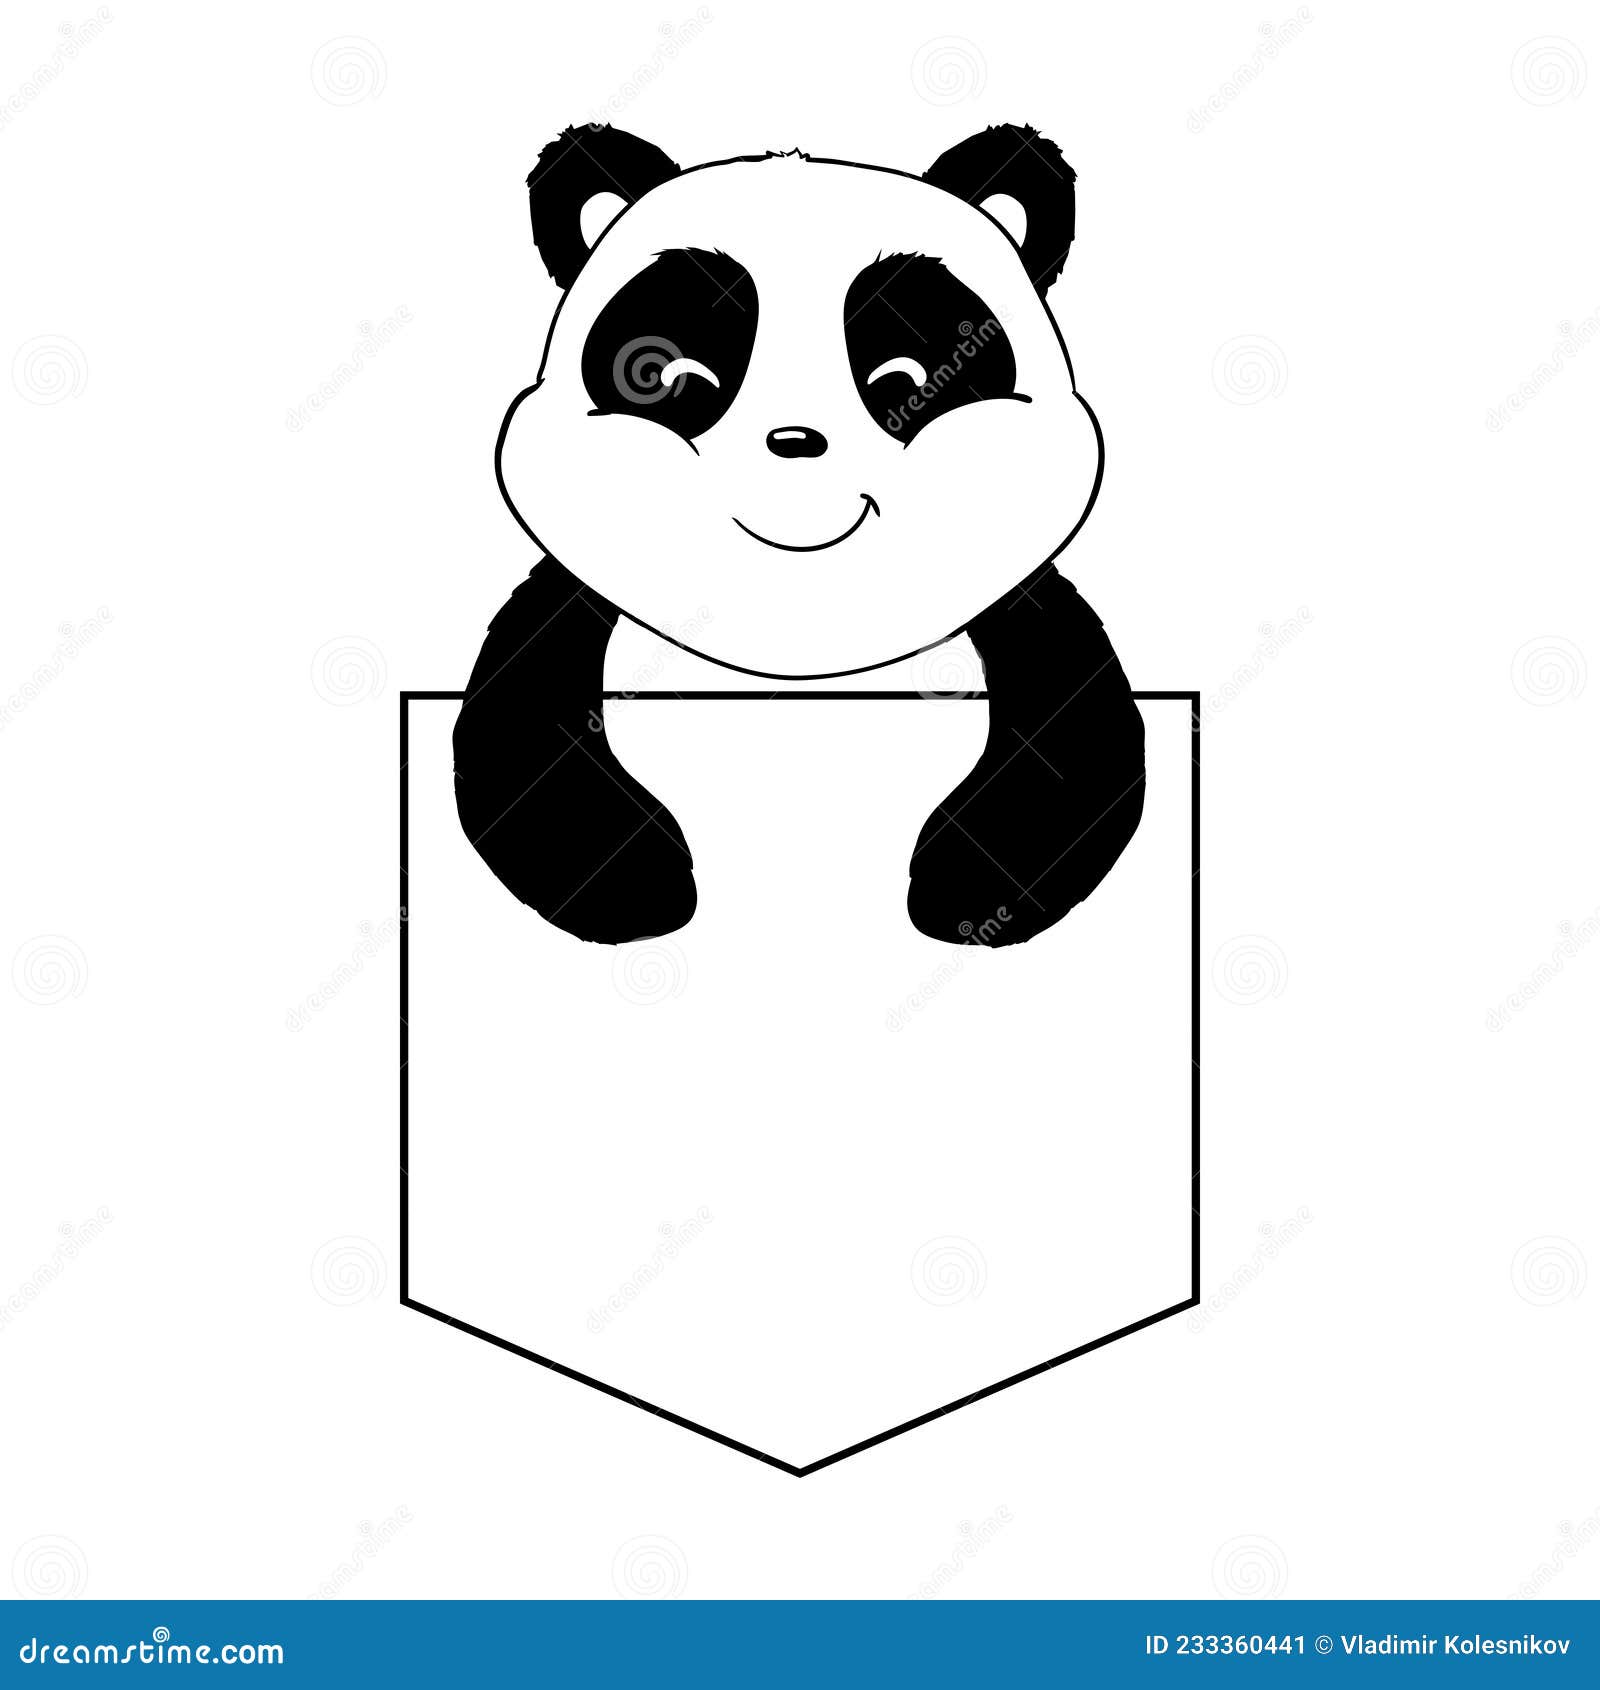 Premium Vector | Cute panda pencil color illustration